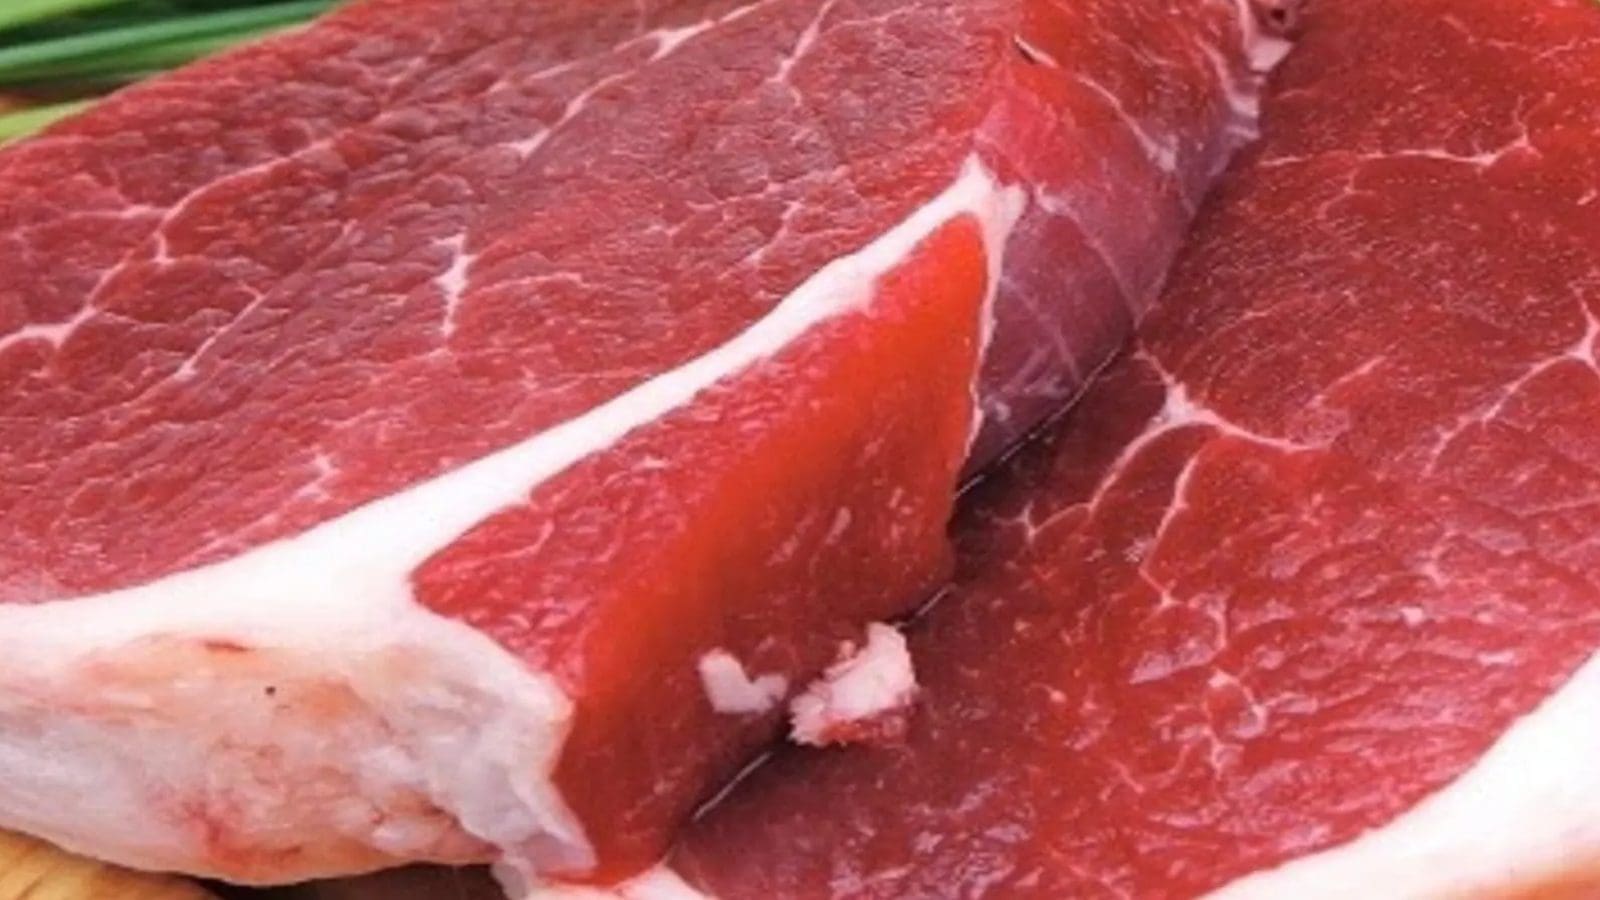 Pork sales thrive amid ARV contamination concerns, prompting calls for industry reform